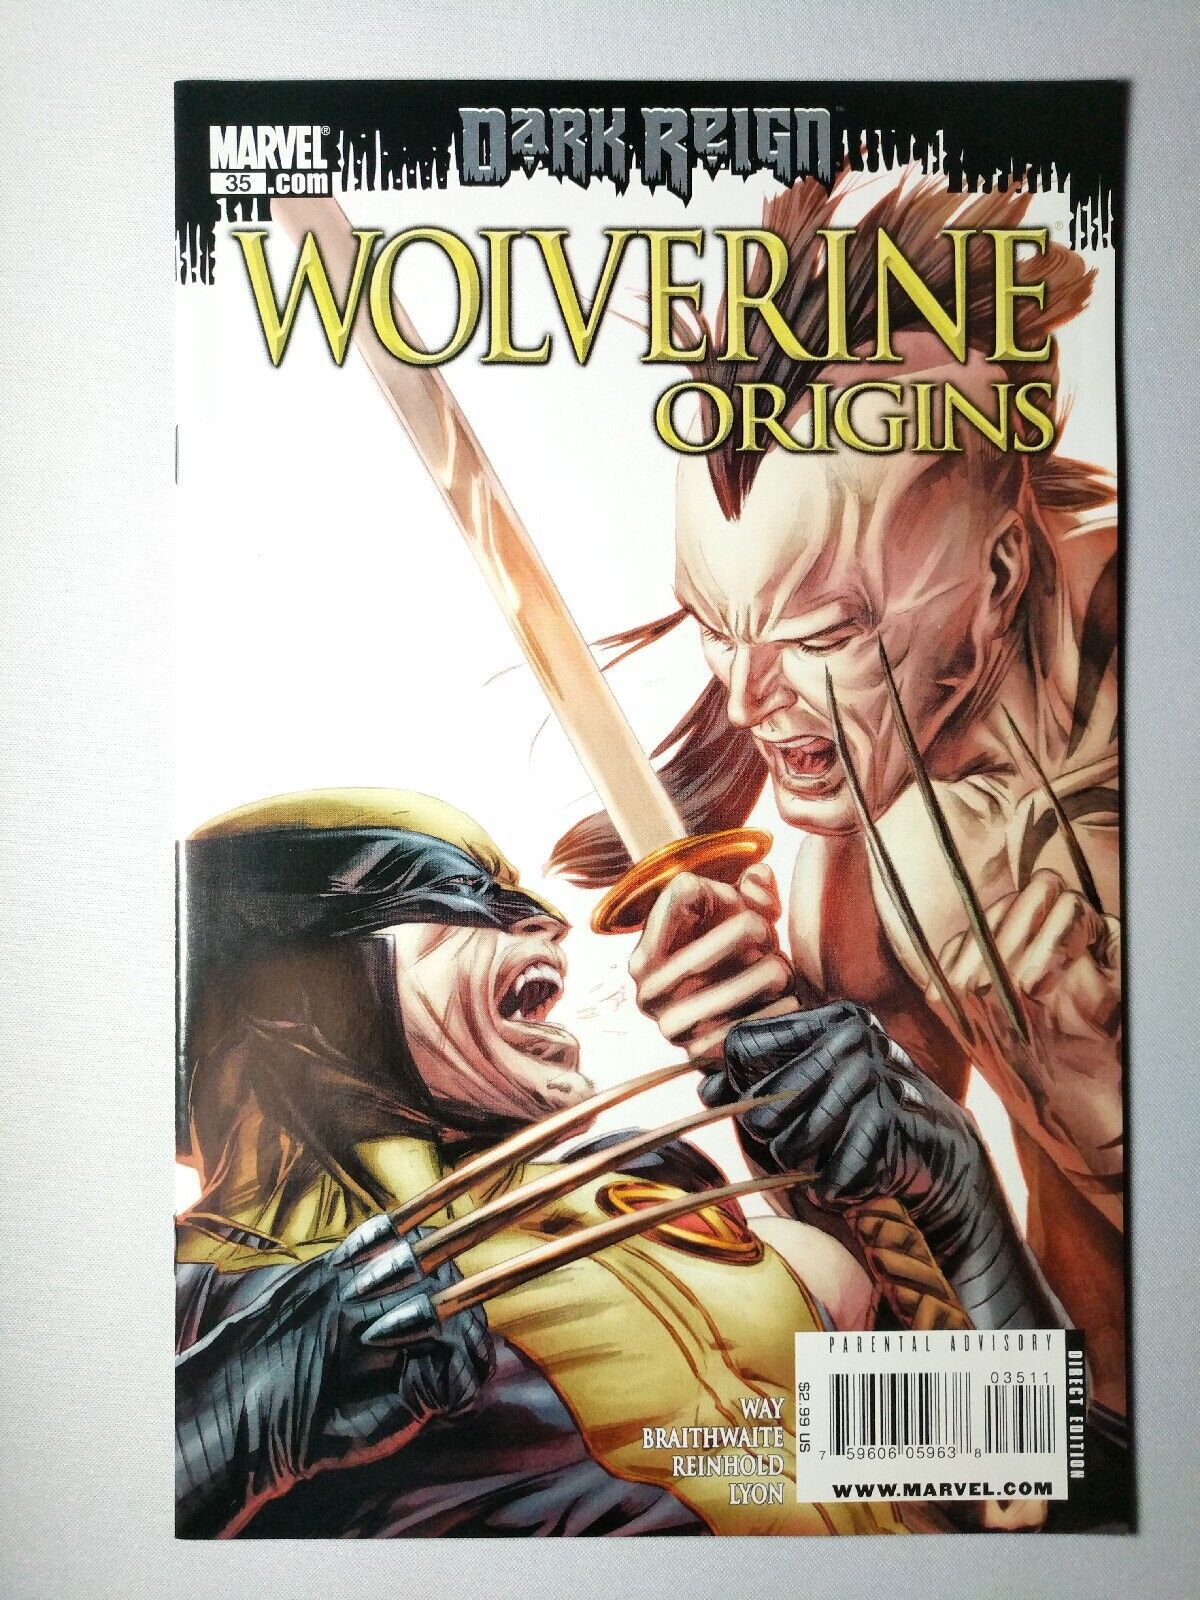 Wolverine Origins #35 - Daken Cover - Combined Shipping + 10 Pics